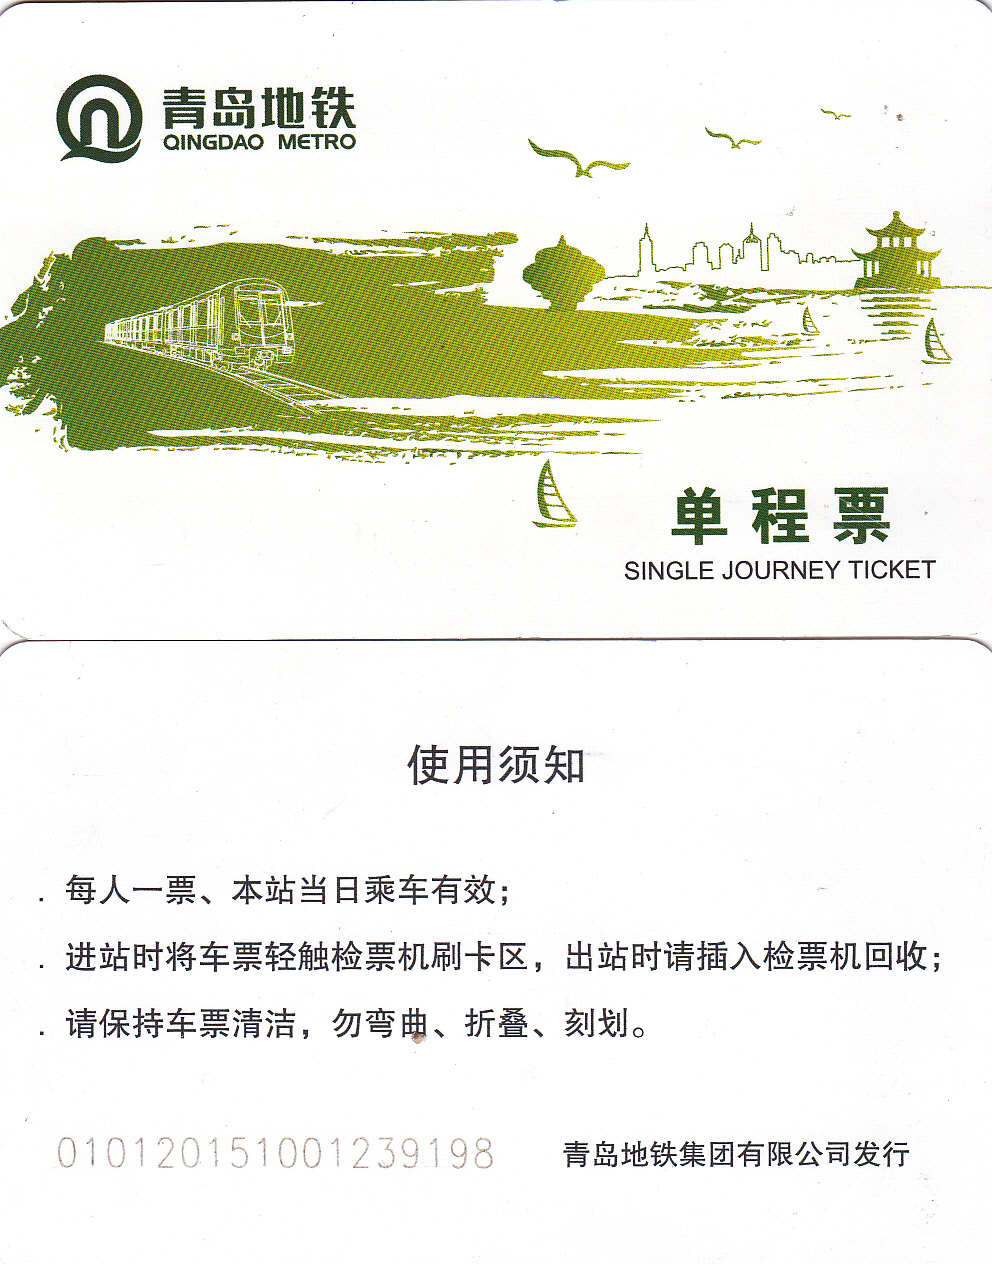 T5270, China Qingdao City, Metro Card (Subway Ticket), One Way 2015, Invalid